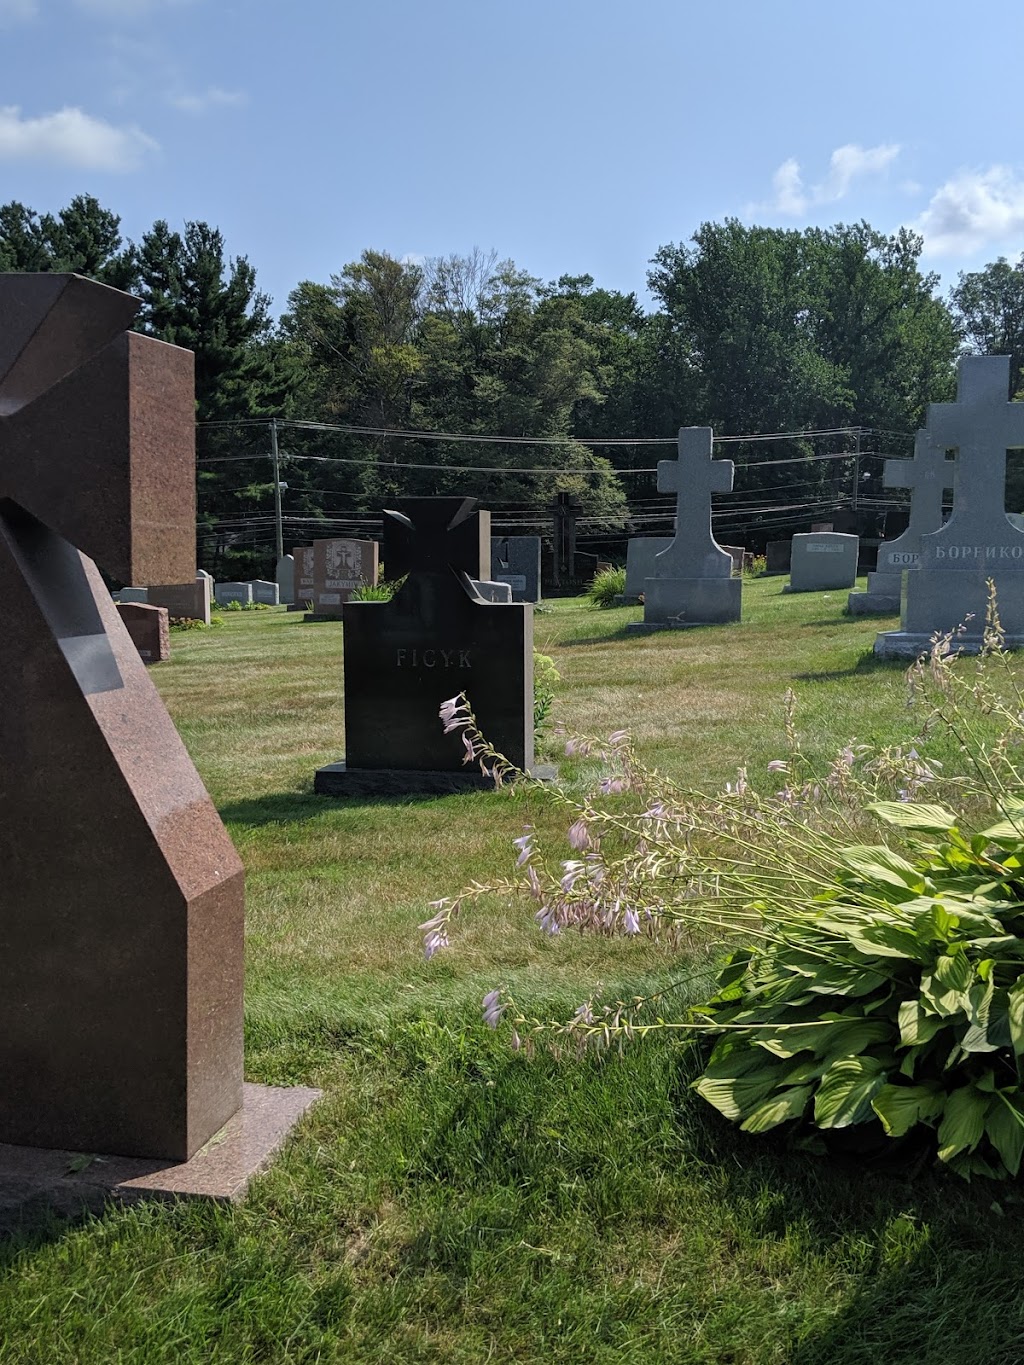 St. Michaels Ukrainian Catholic Cemetery​ | 1458 New London Turnpike, Glastonbury, CT 06033 | Phone: (860) 525-7823